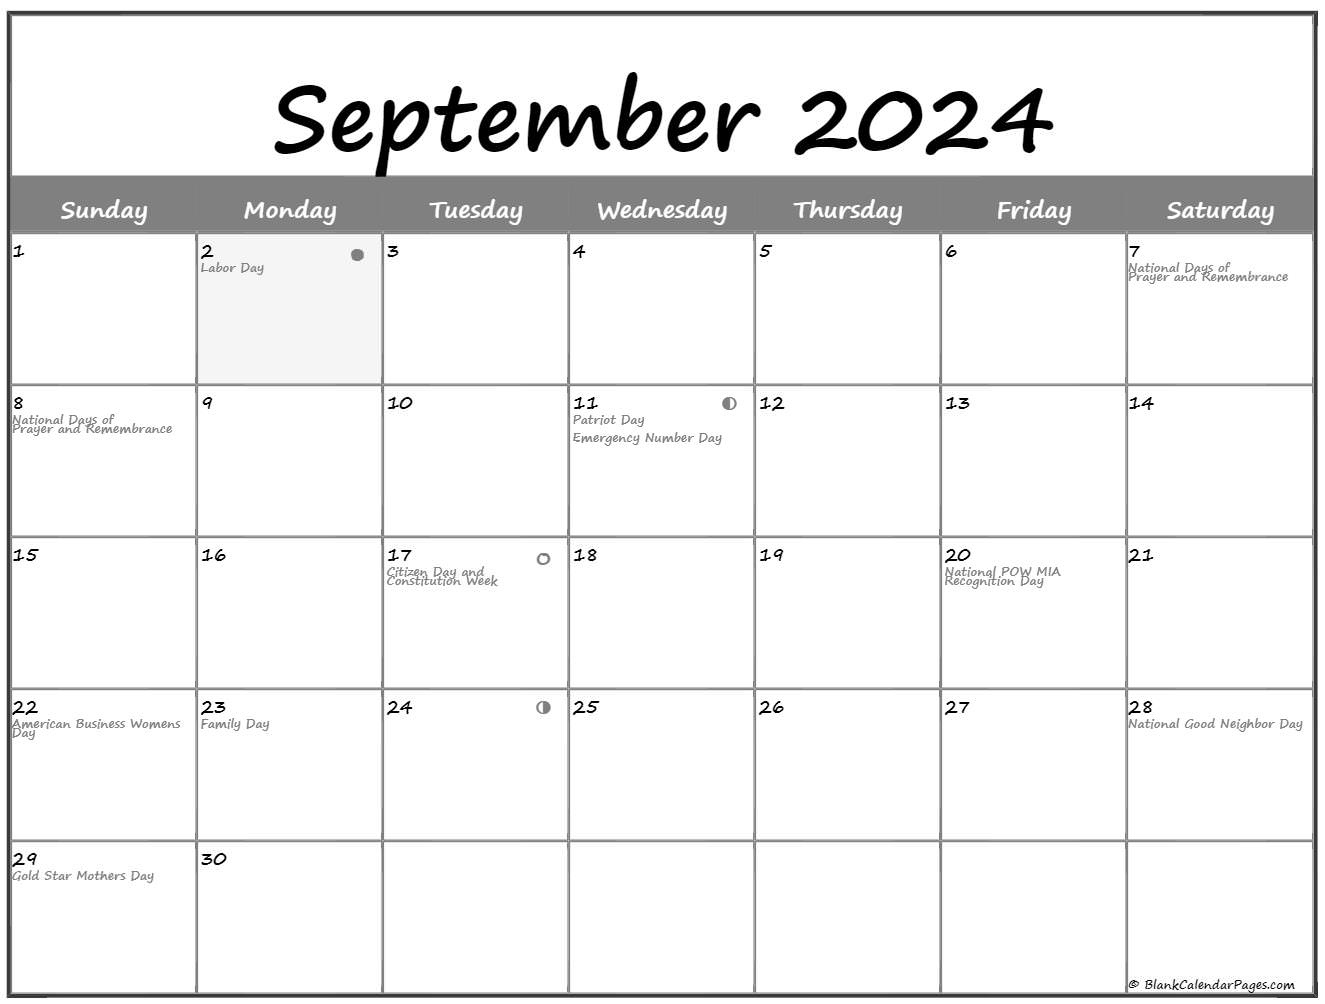 Lunar Calendar September 2022 September 2022 Lunar Calendar | Moon Phase Calendar